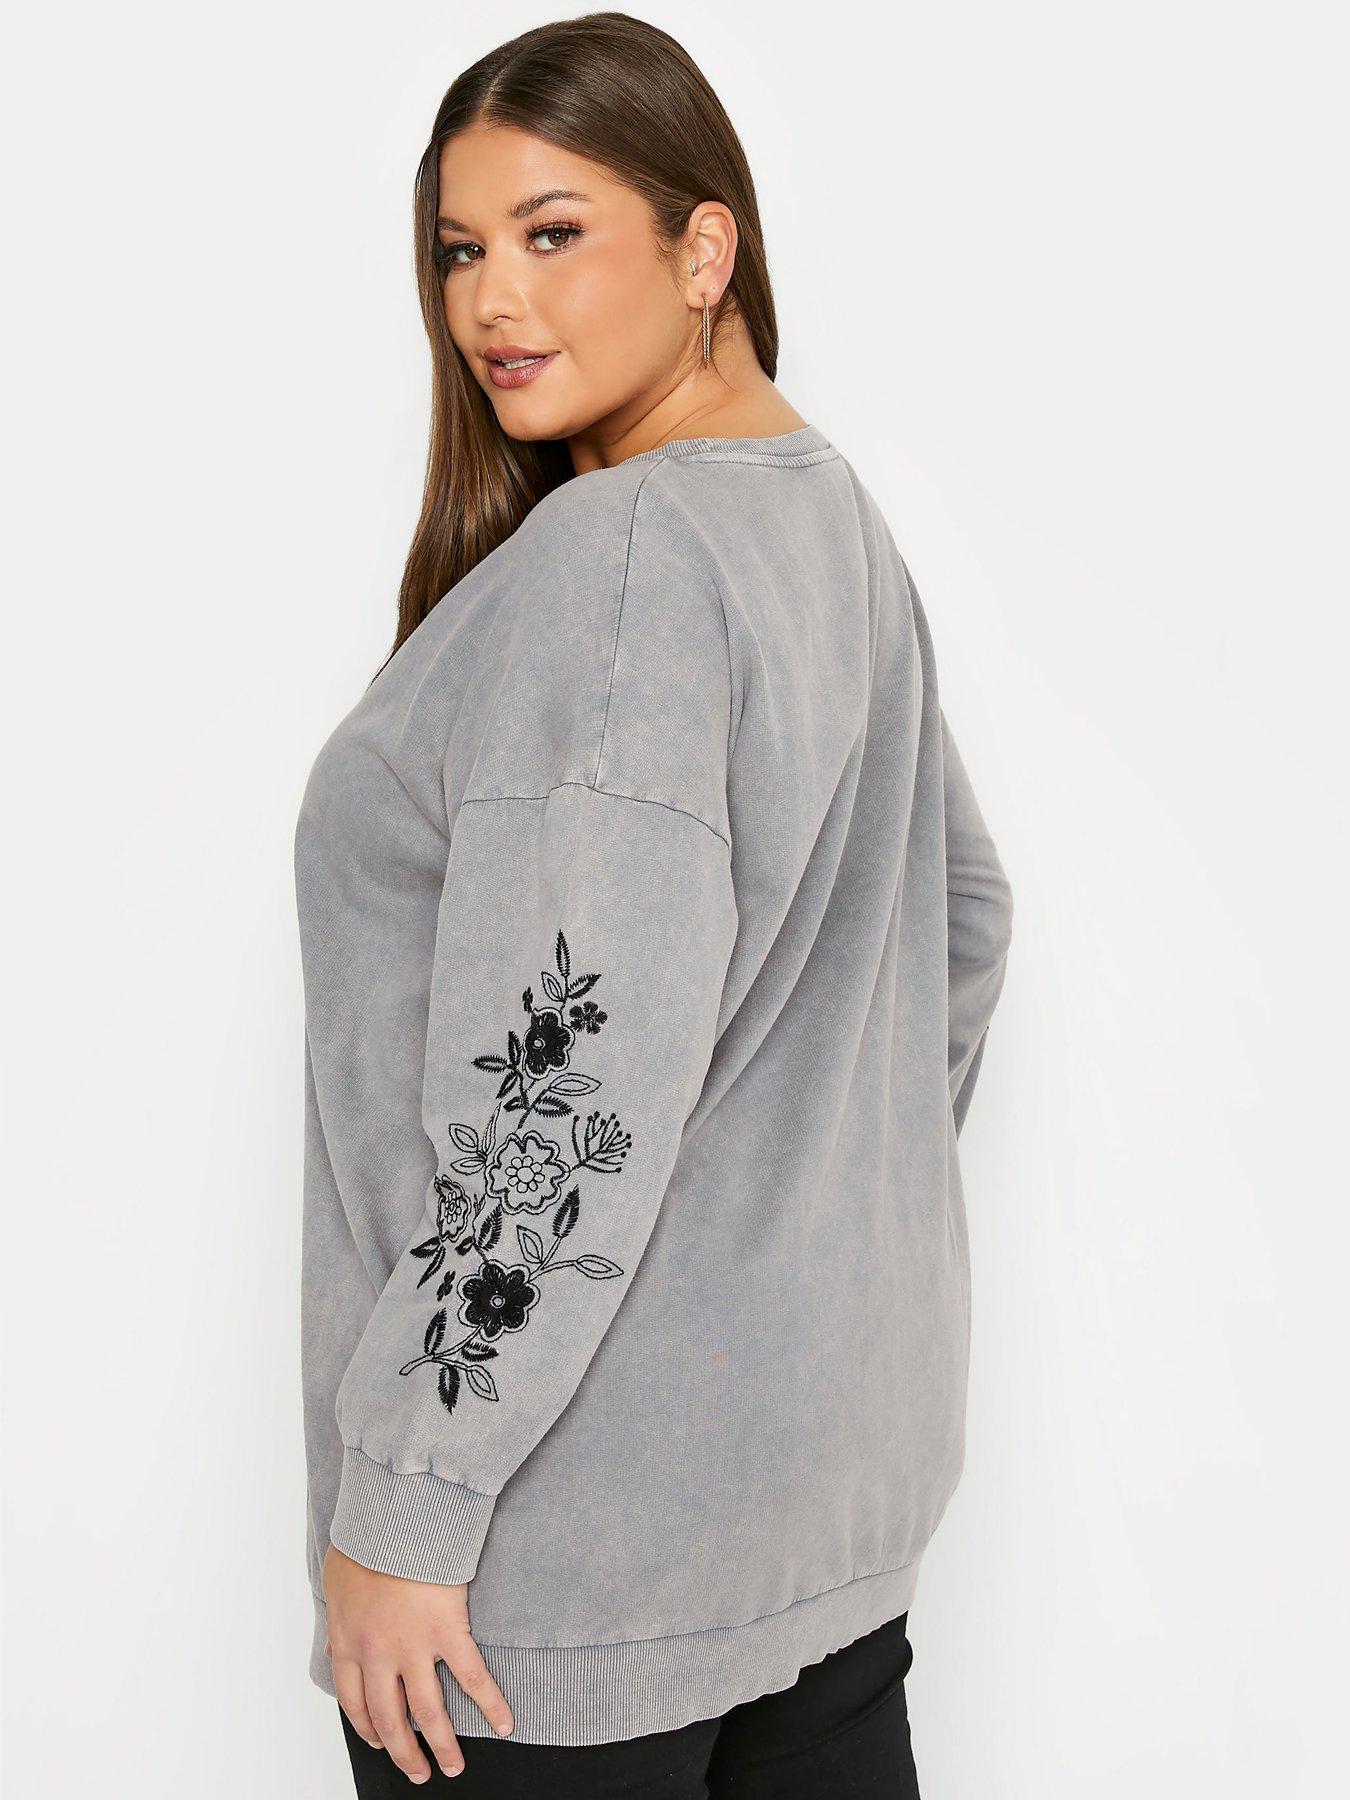 Hoodies & Sweatshirts Yours Floral Sleeve Sweatshirt - Grey